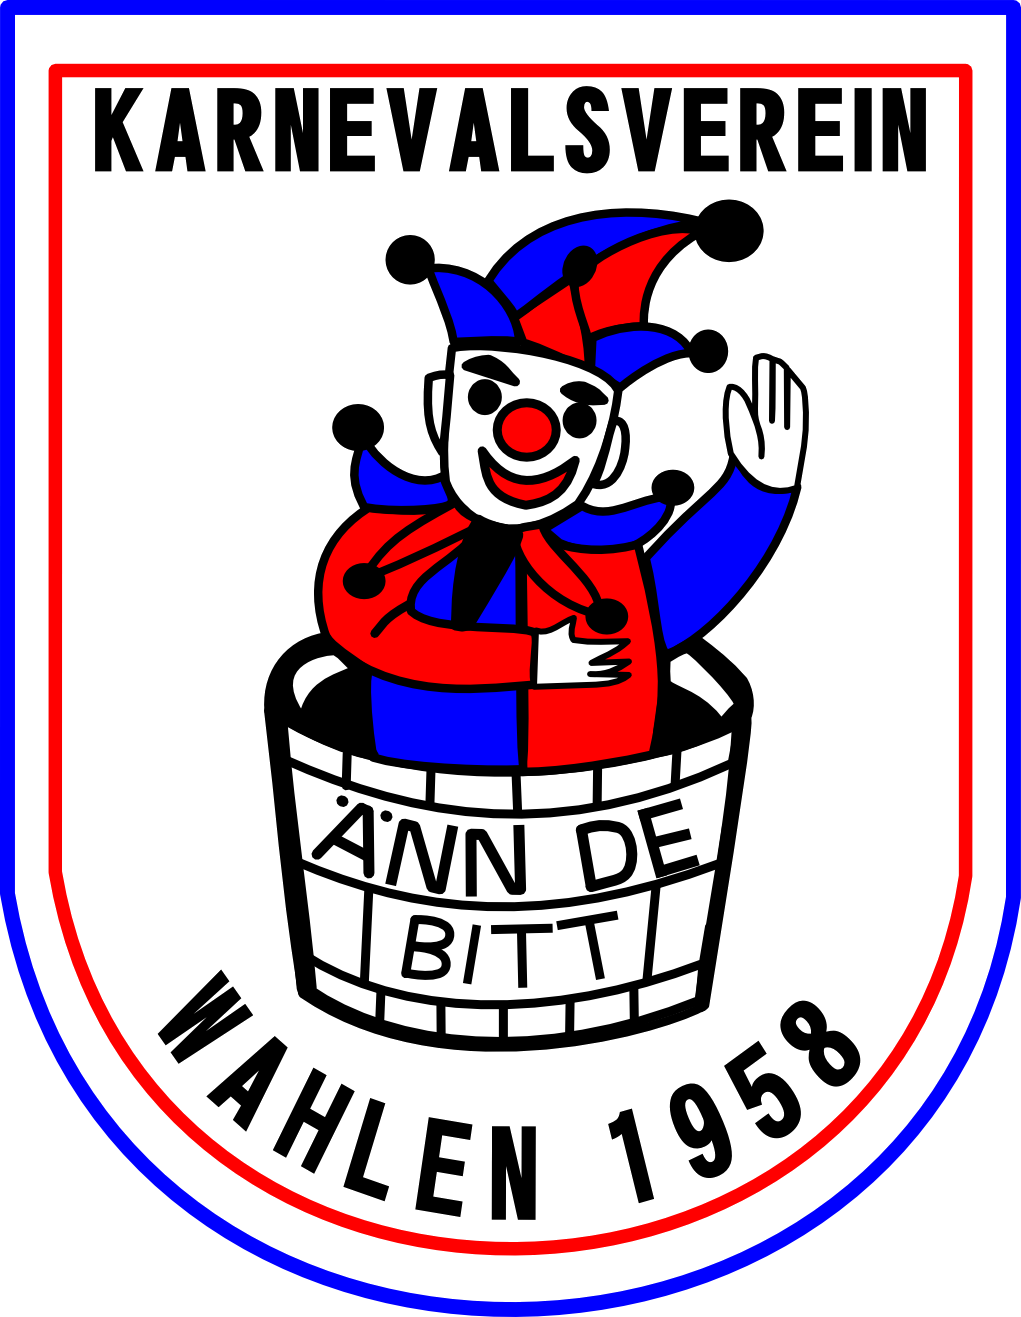 Profilbild des Vereins KV "Änn de Bitt" Wahlen